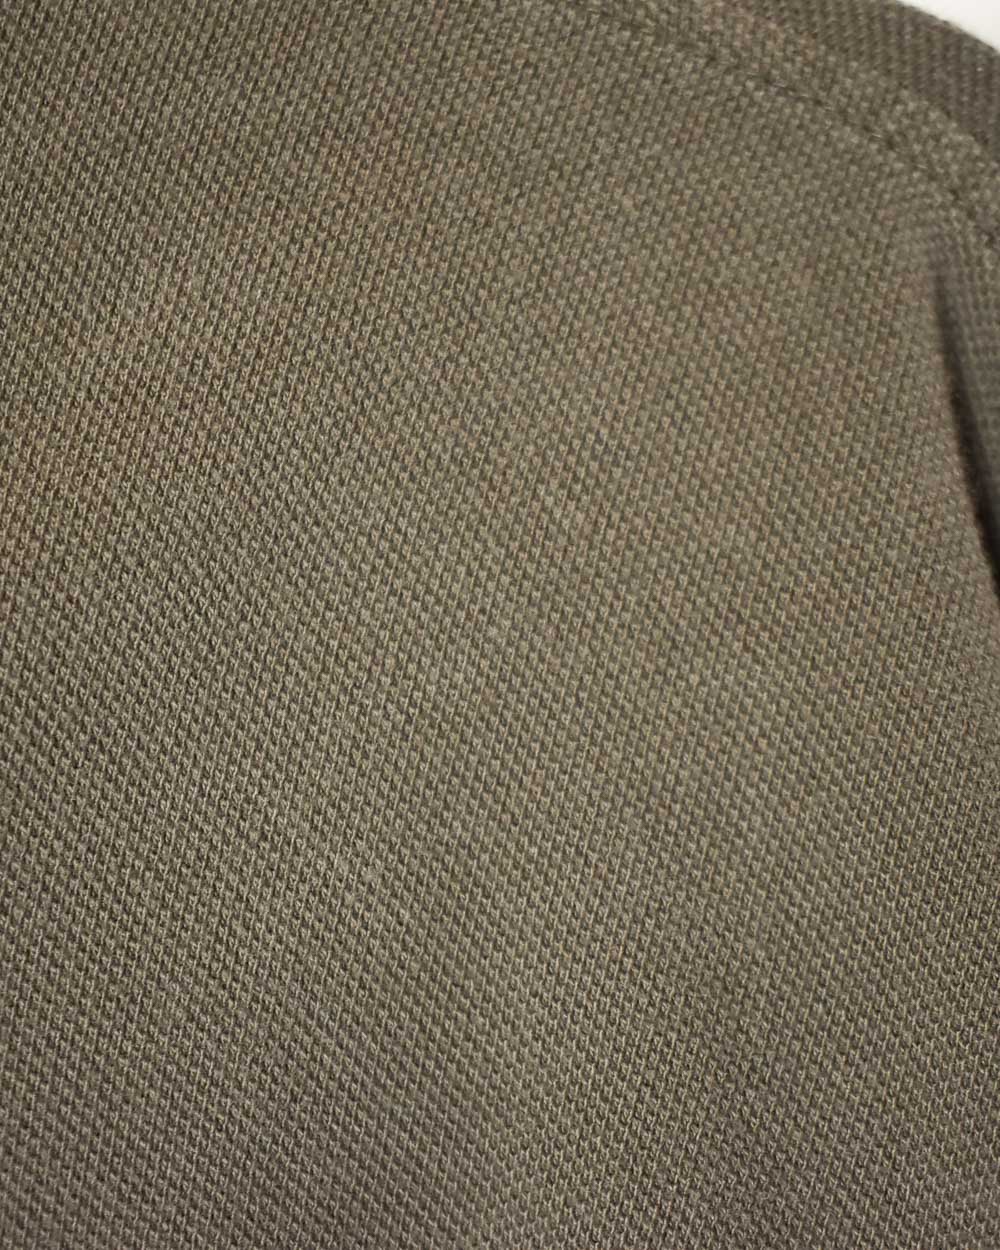 Brown Nike Long Sleeved Polo Shirt - Medium